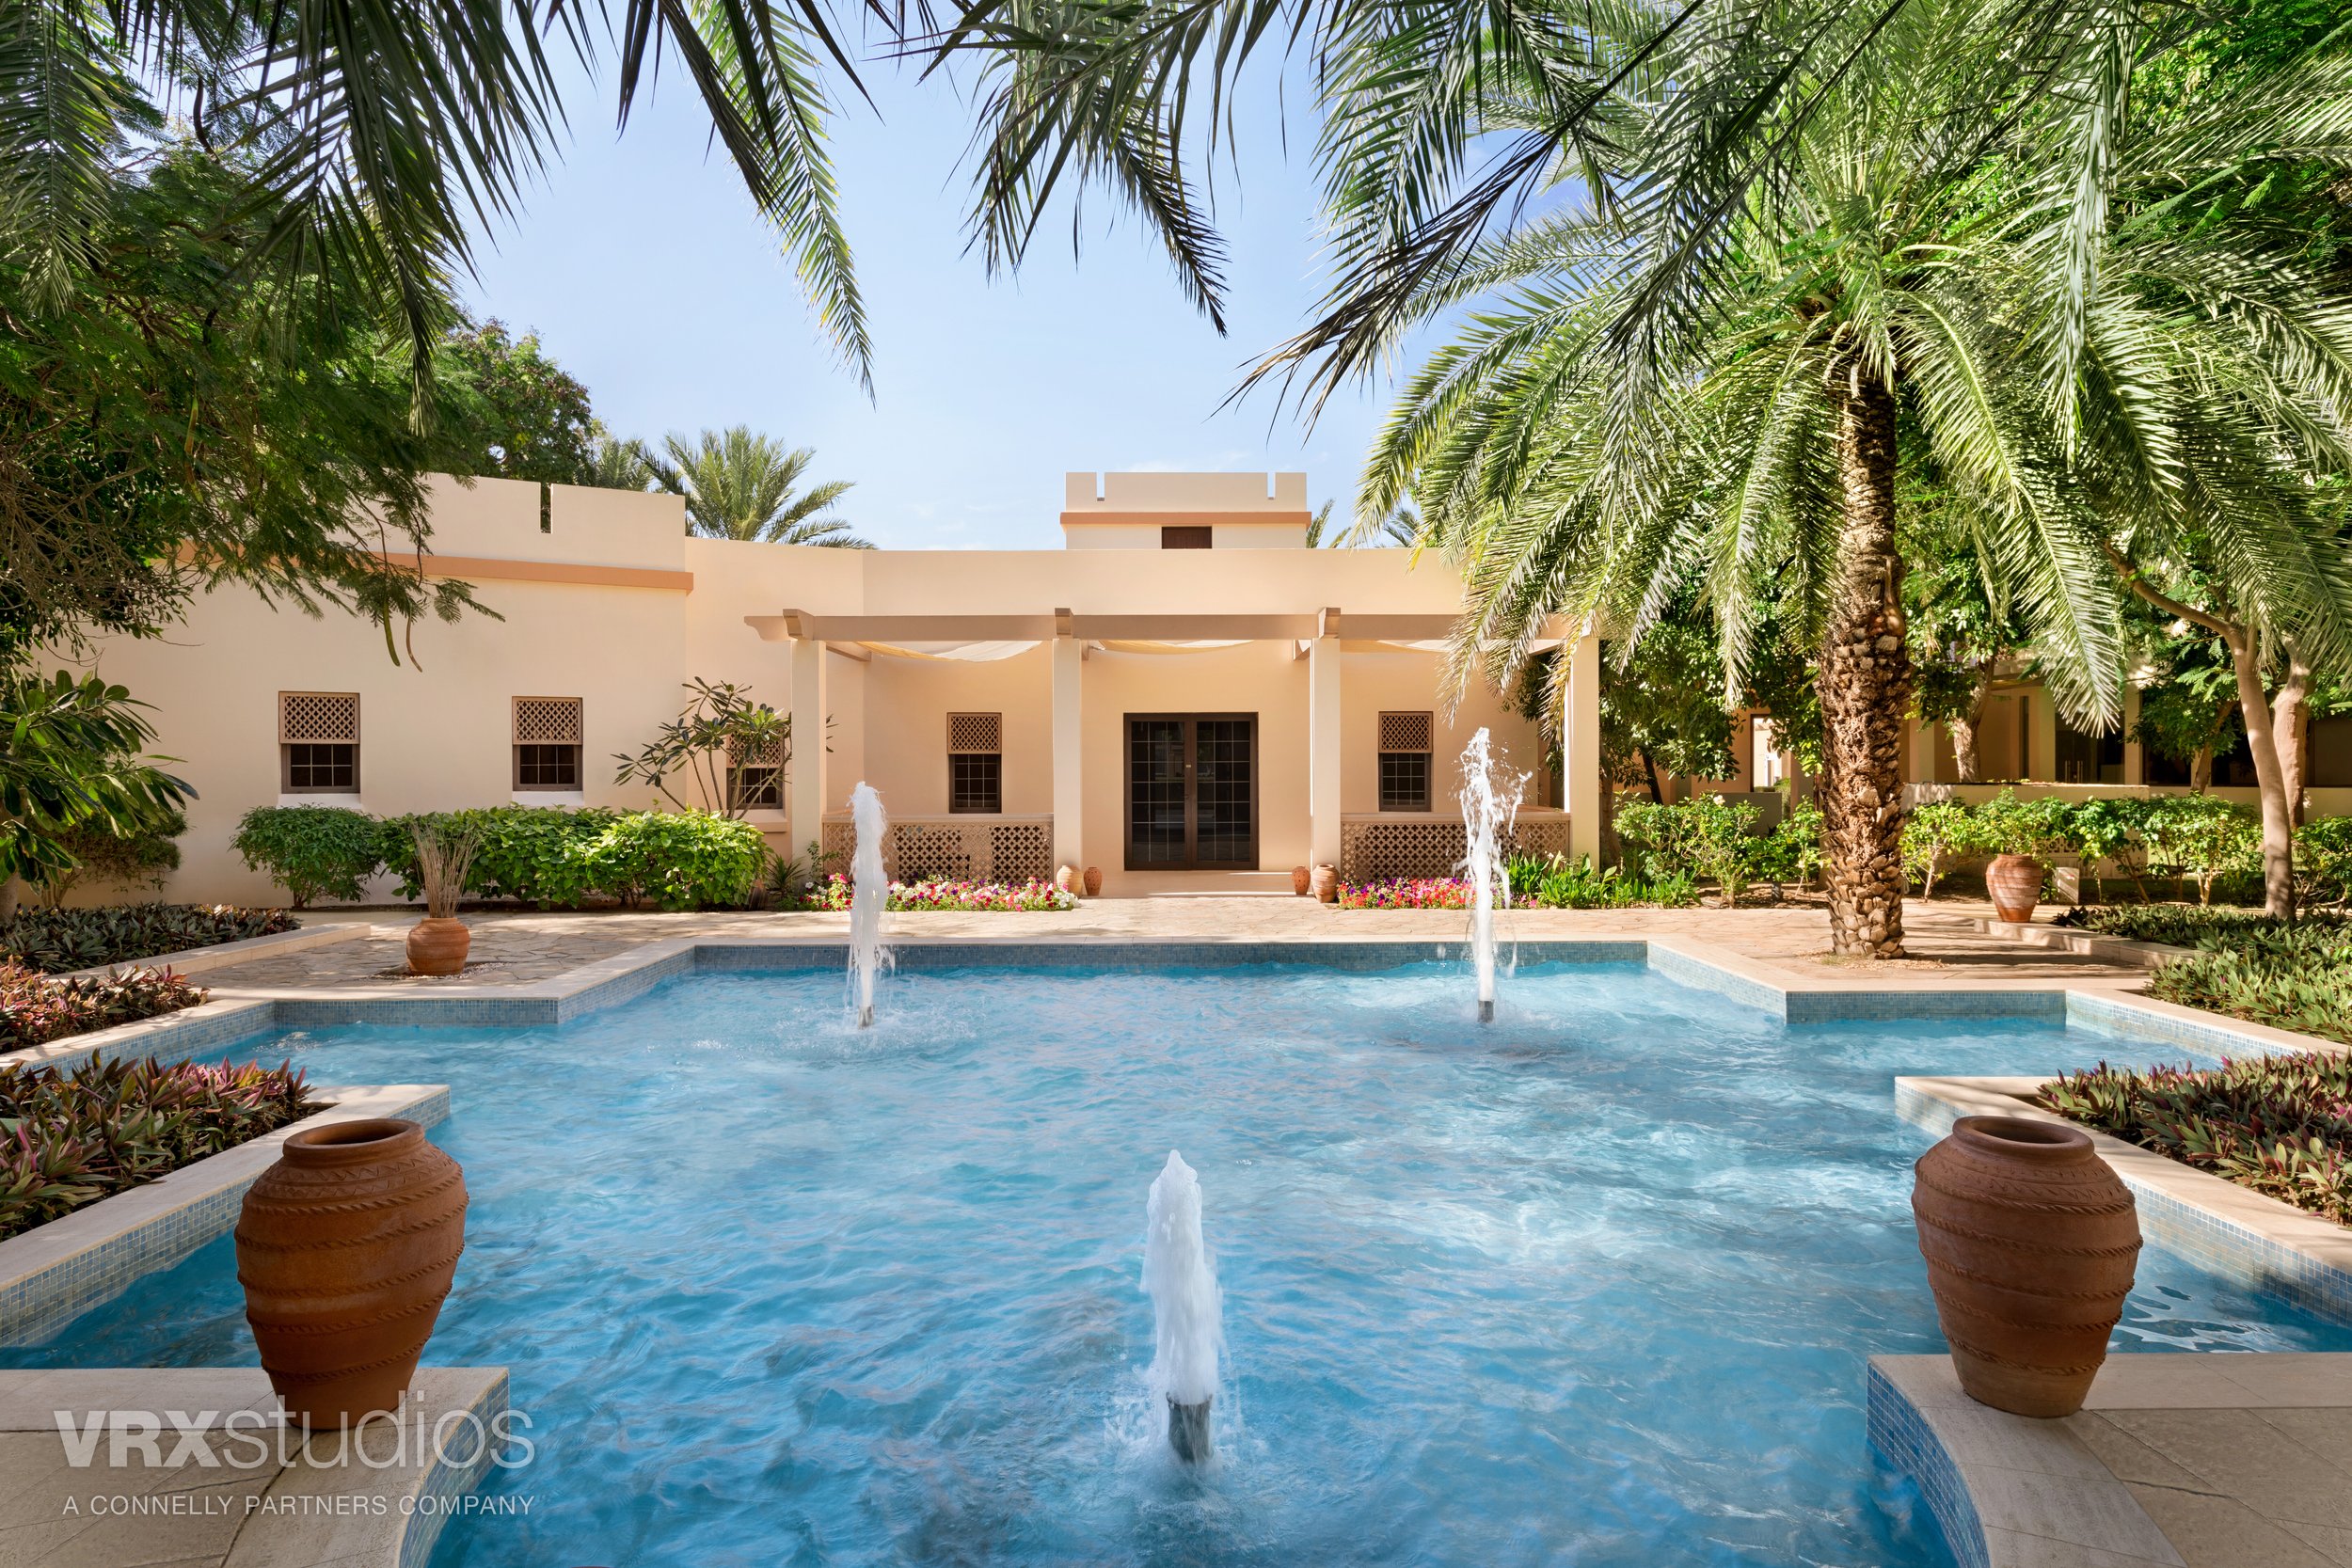  Client: VRX Studios • Project: Shangri-La Barr Al Jissah Resort &amp; Spa, Oman • Photographer: Marcelo Barbosa • Produced by: VRX Studios 20/01/2020 